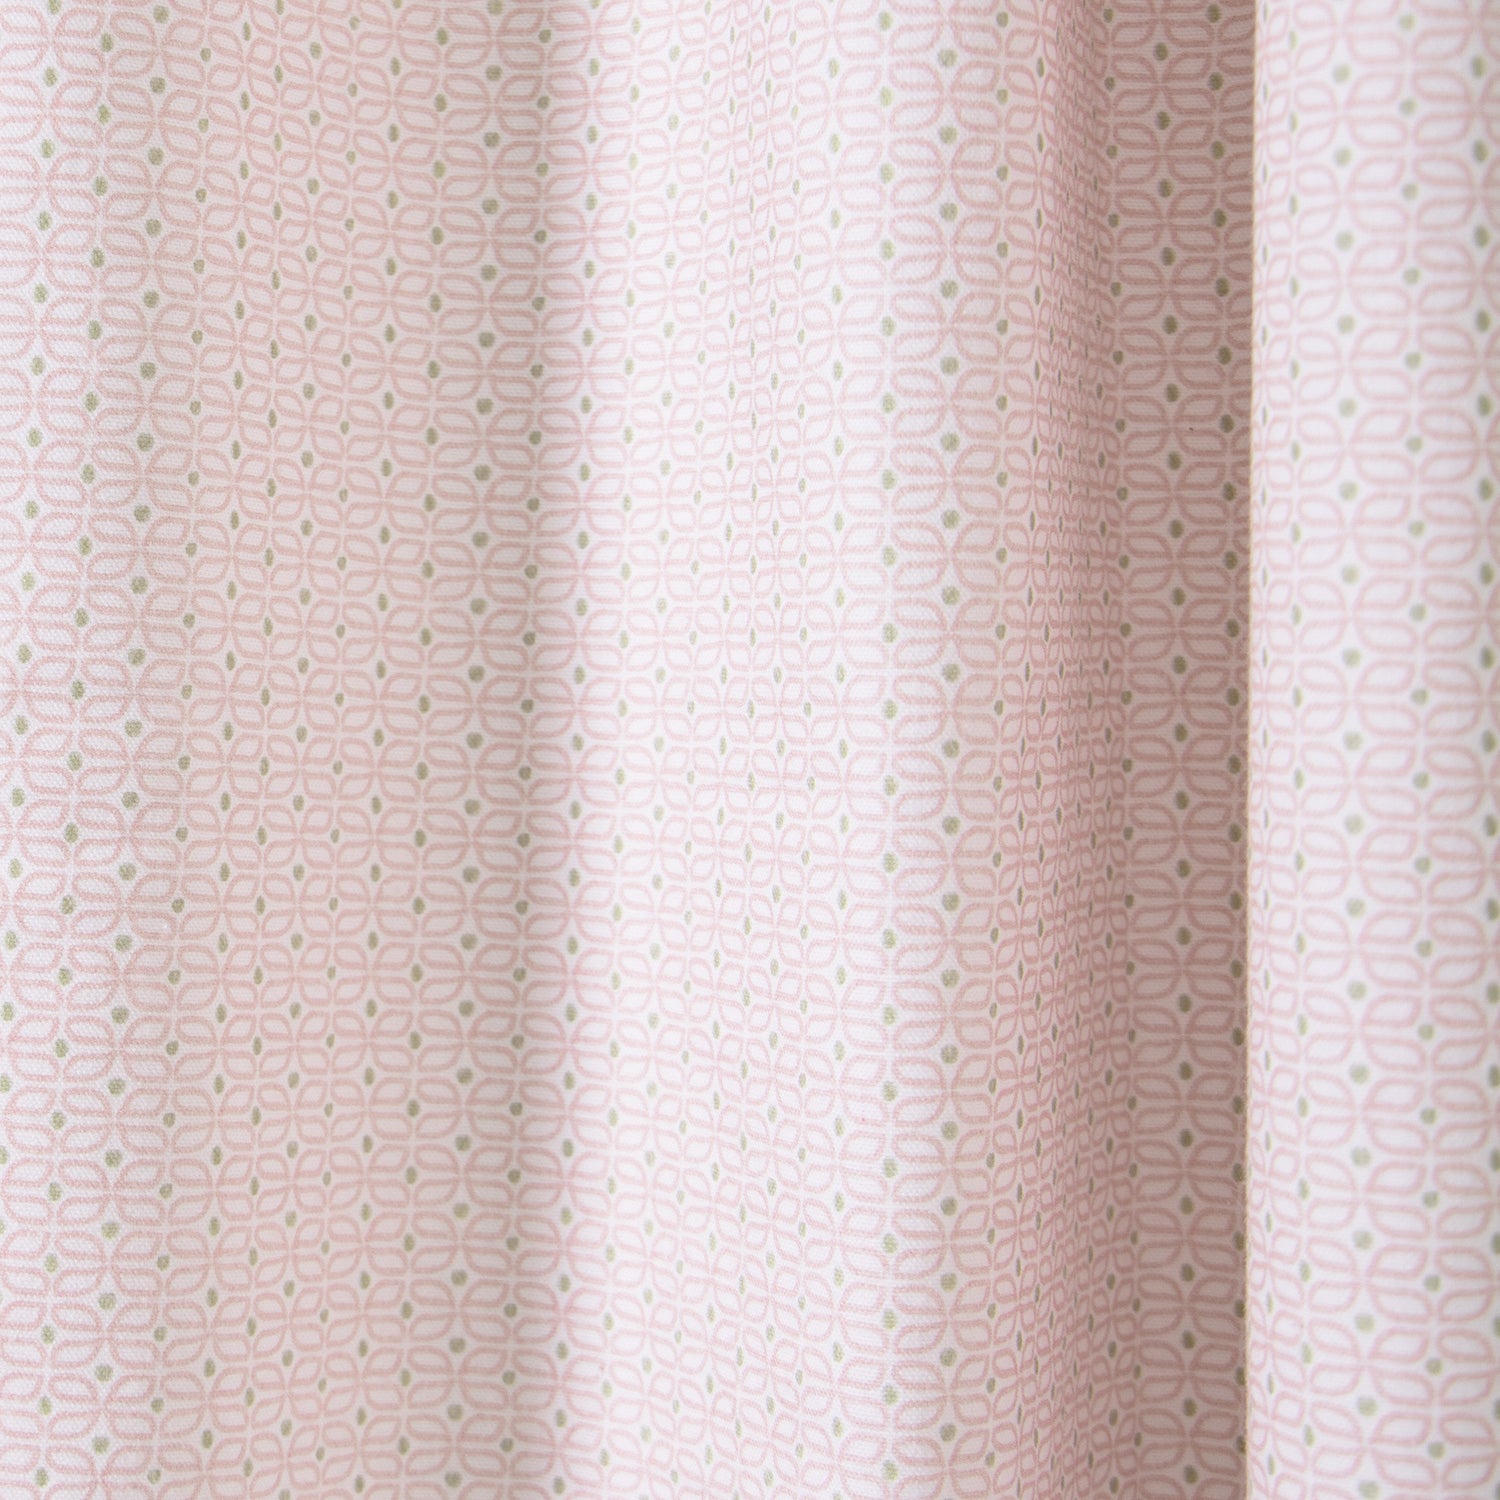 Pink Geometric Printed Curtain Close-Up